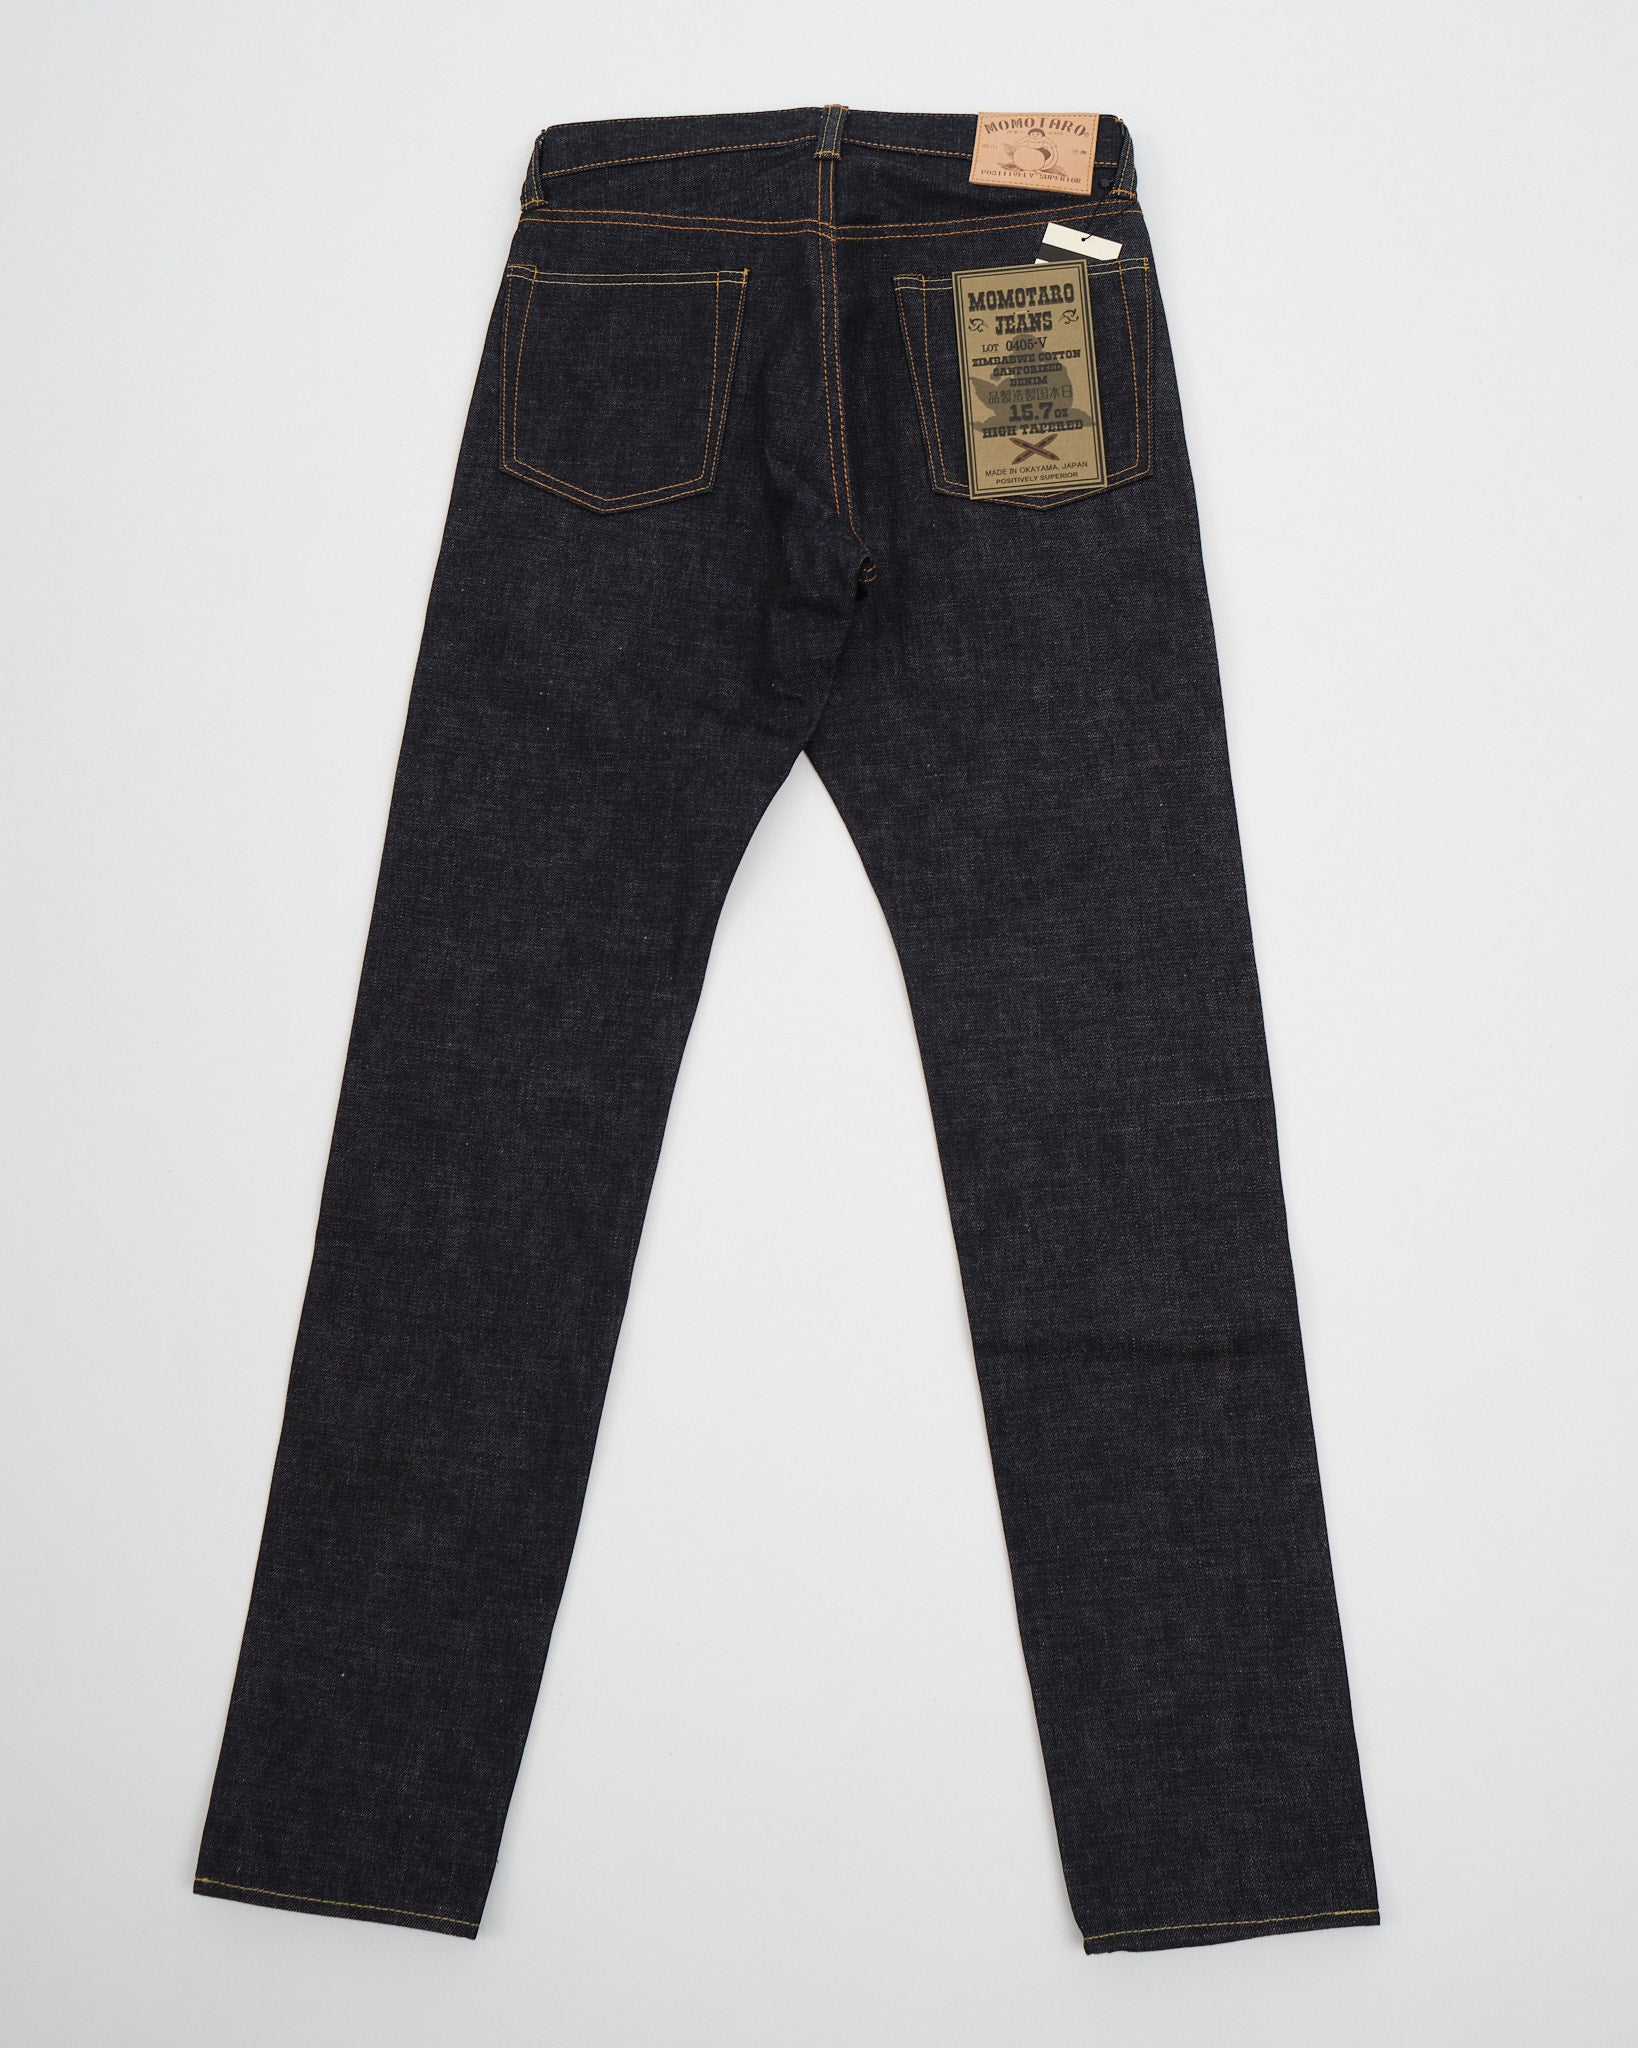 0405-V 15.7 oz Zimbabwe Cotton High Tapered Jeans